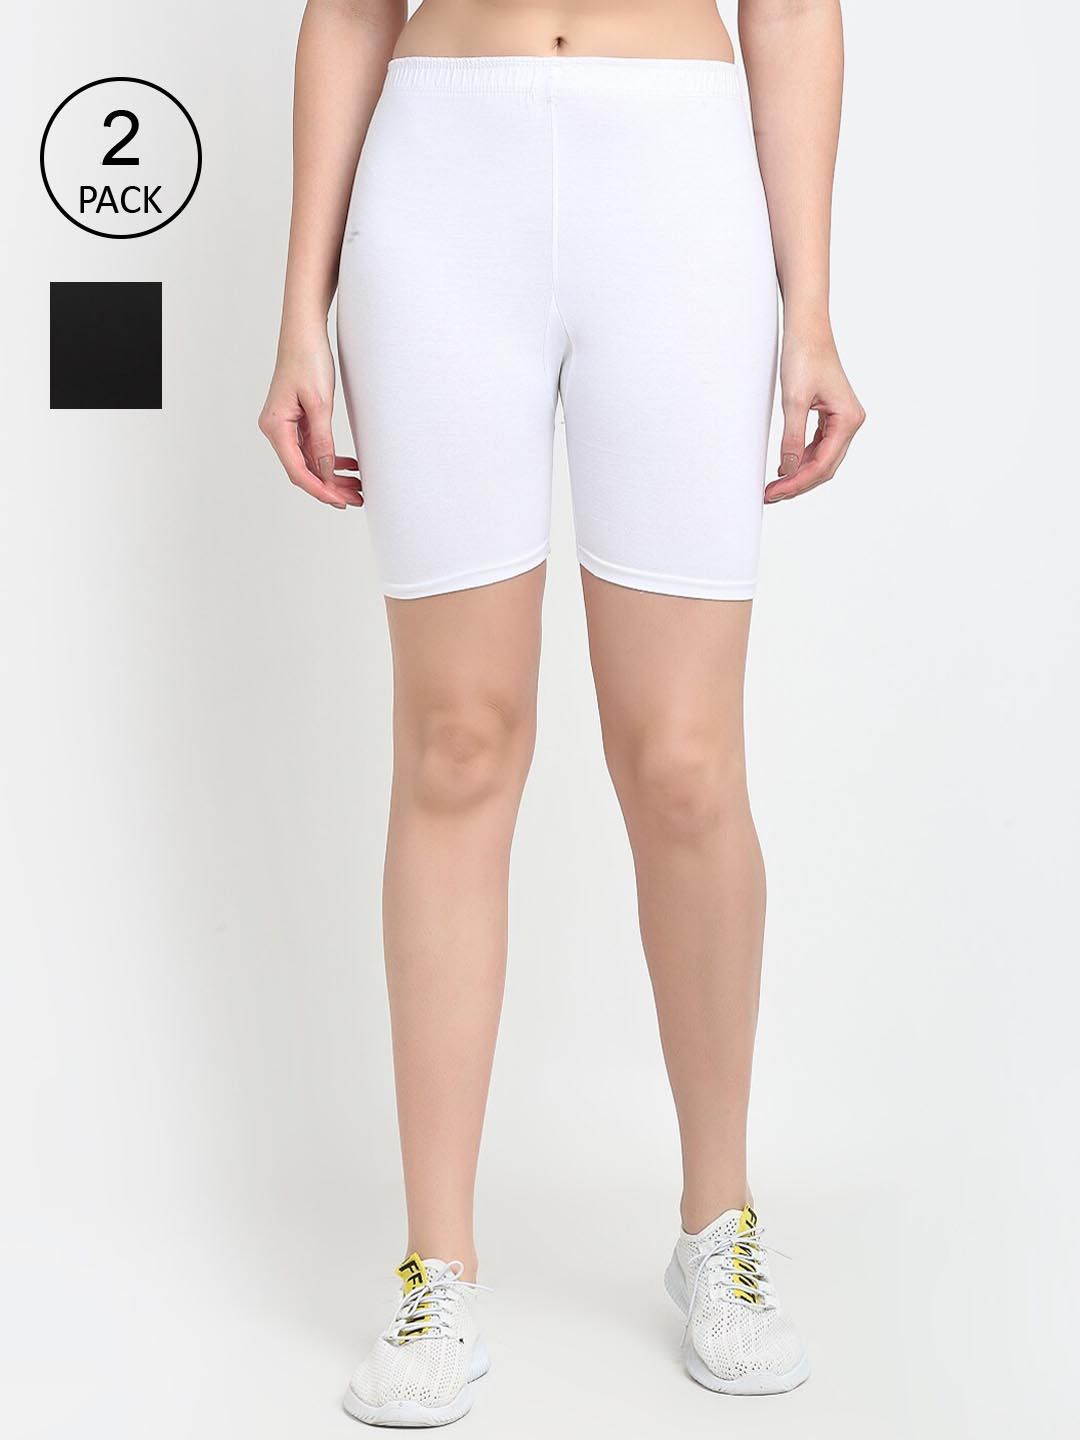 GRACIT Women Black & White Set Of 2 Biker Shorts Price in India